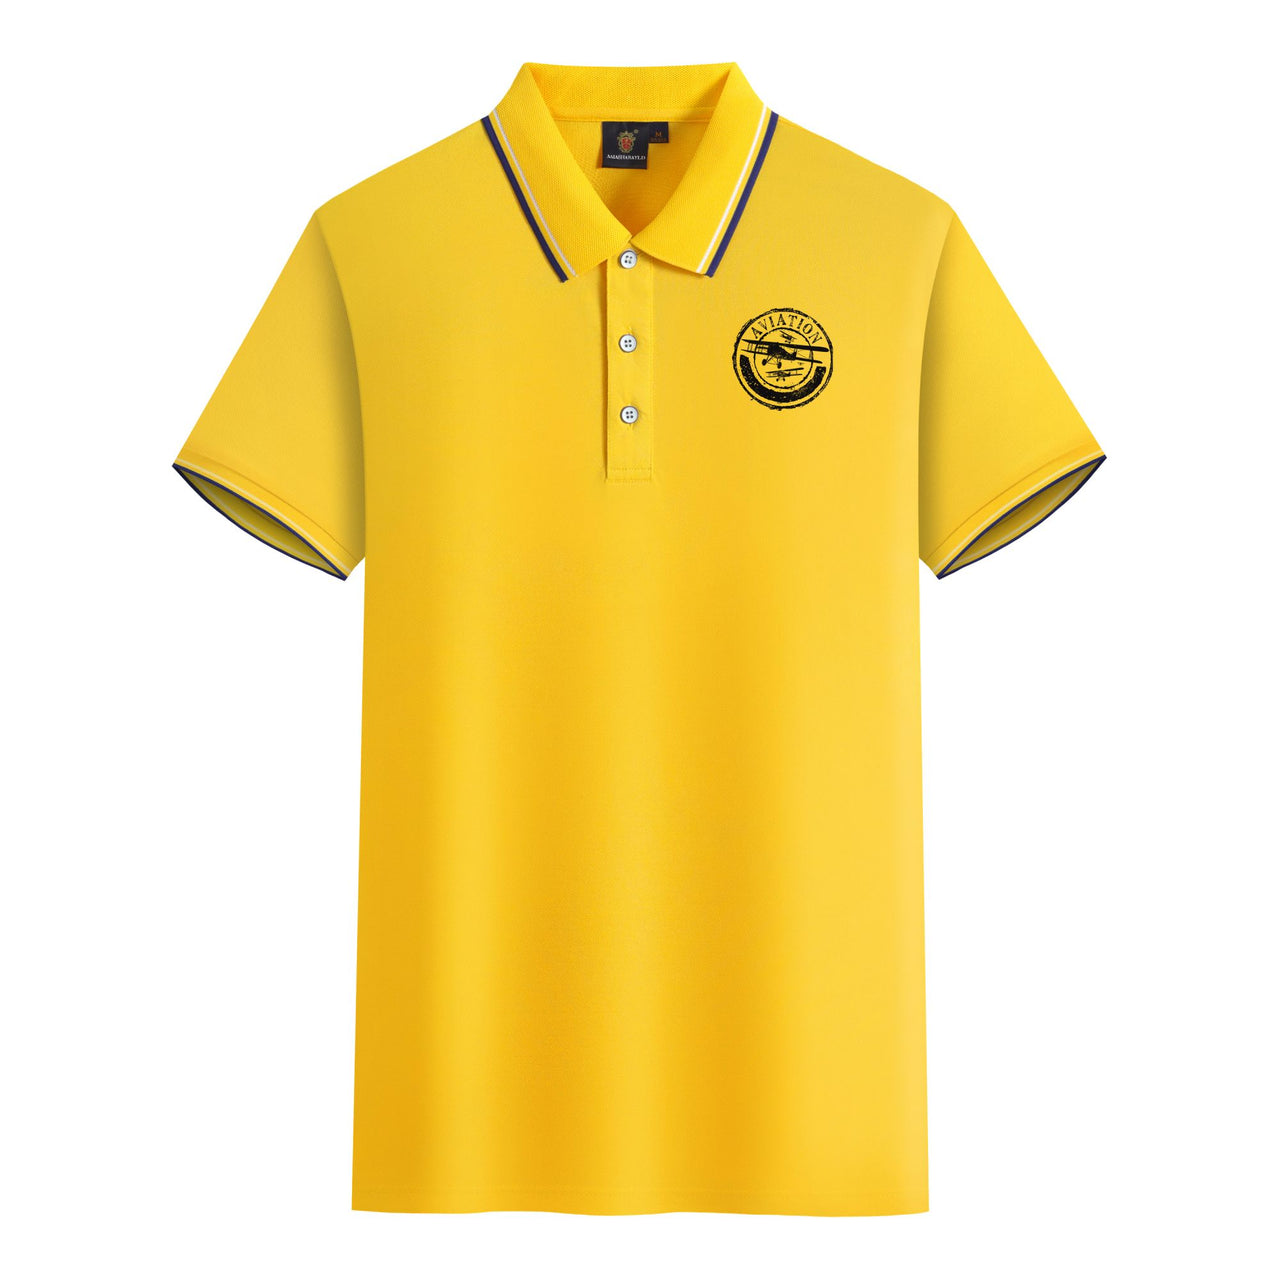 Aviation Lovers Designed Stylish Polo T-Shirts